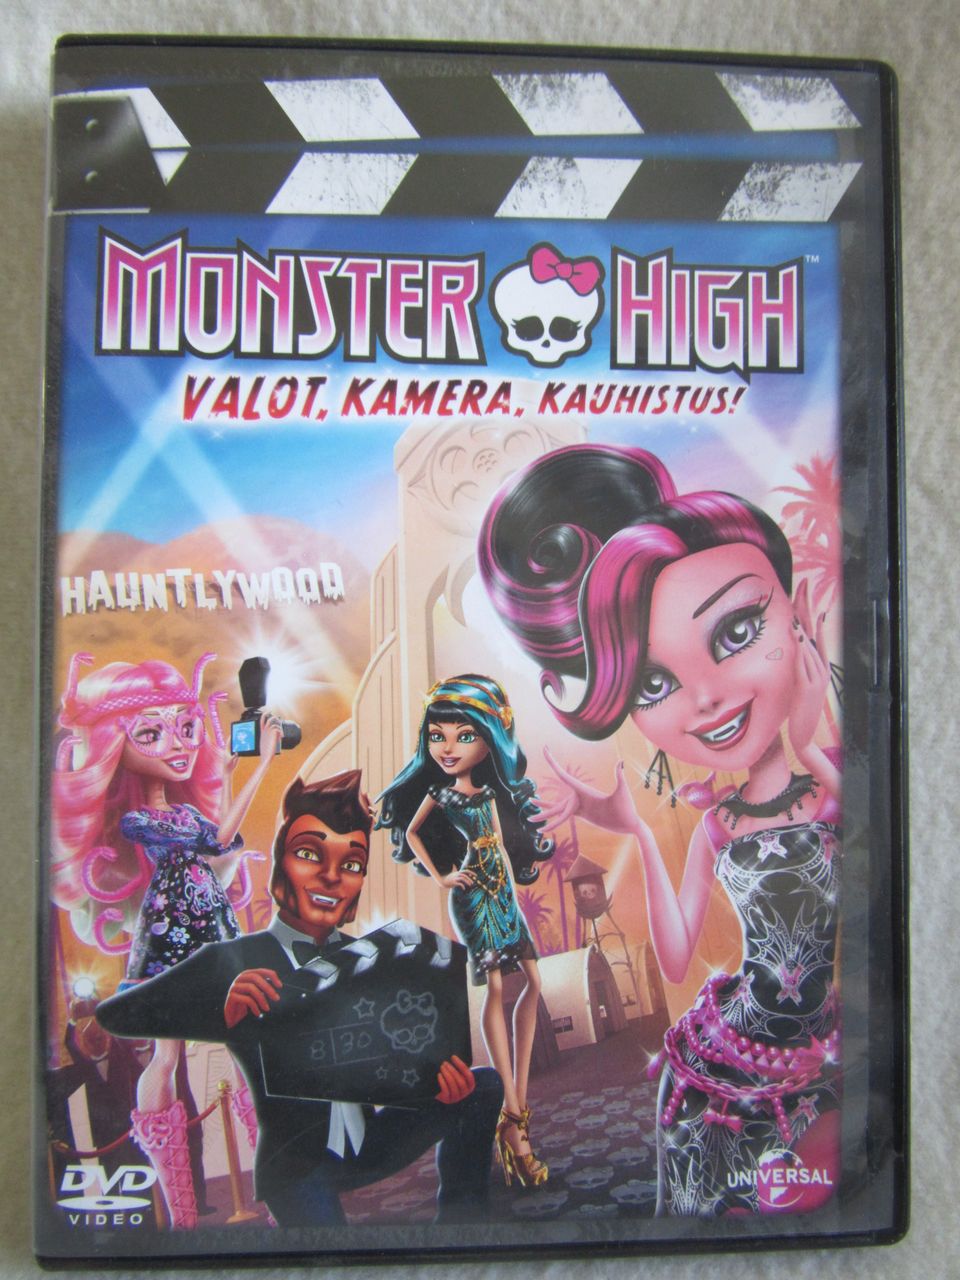 Monster High Valot, kamera, kauhistus! dvd